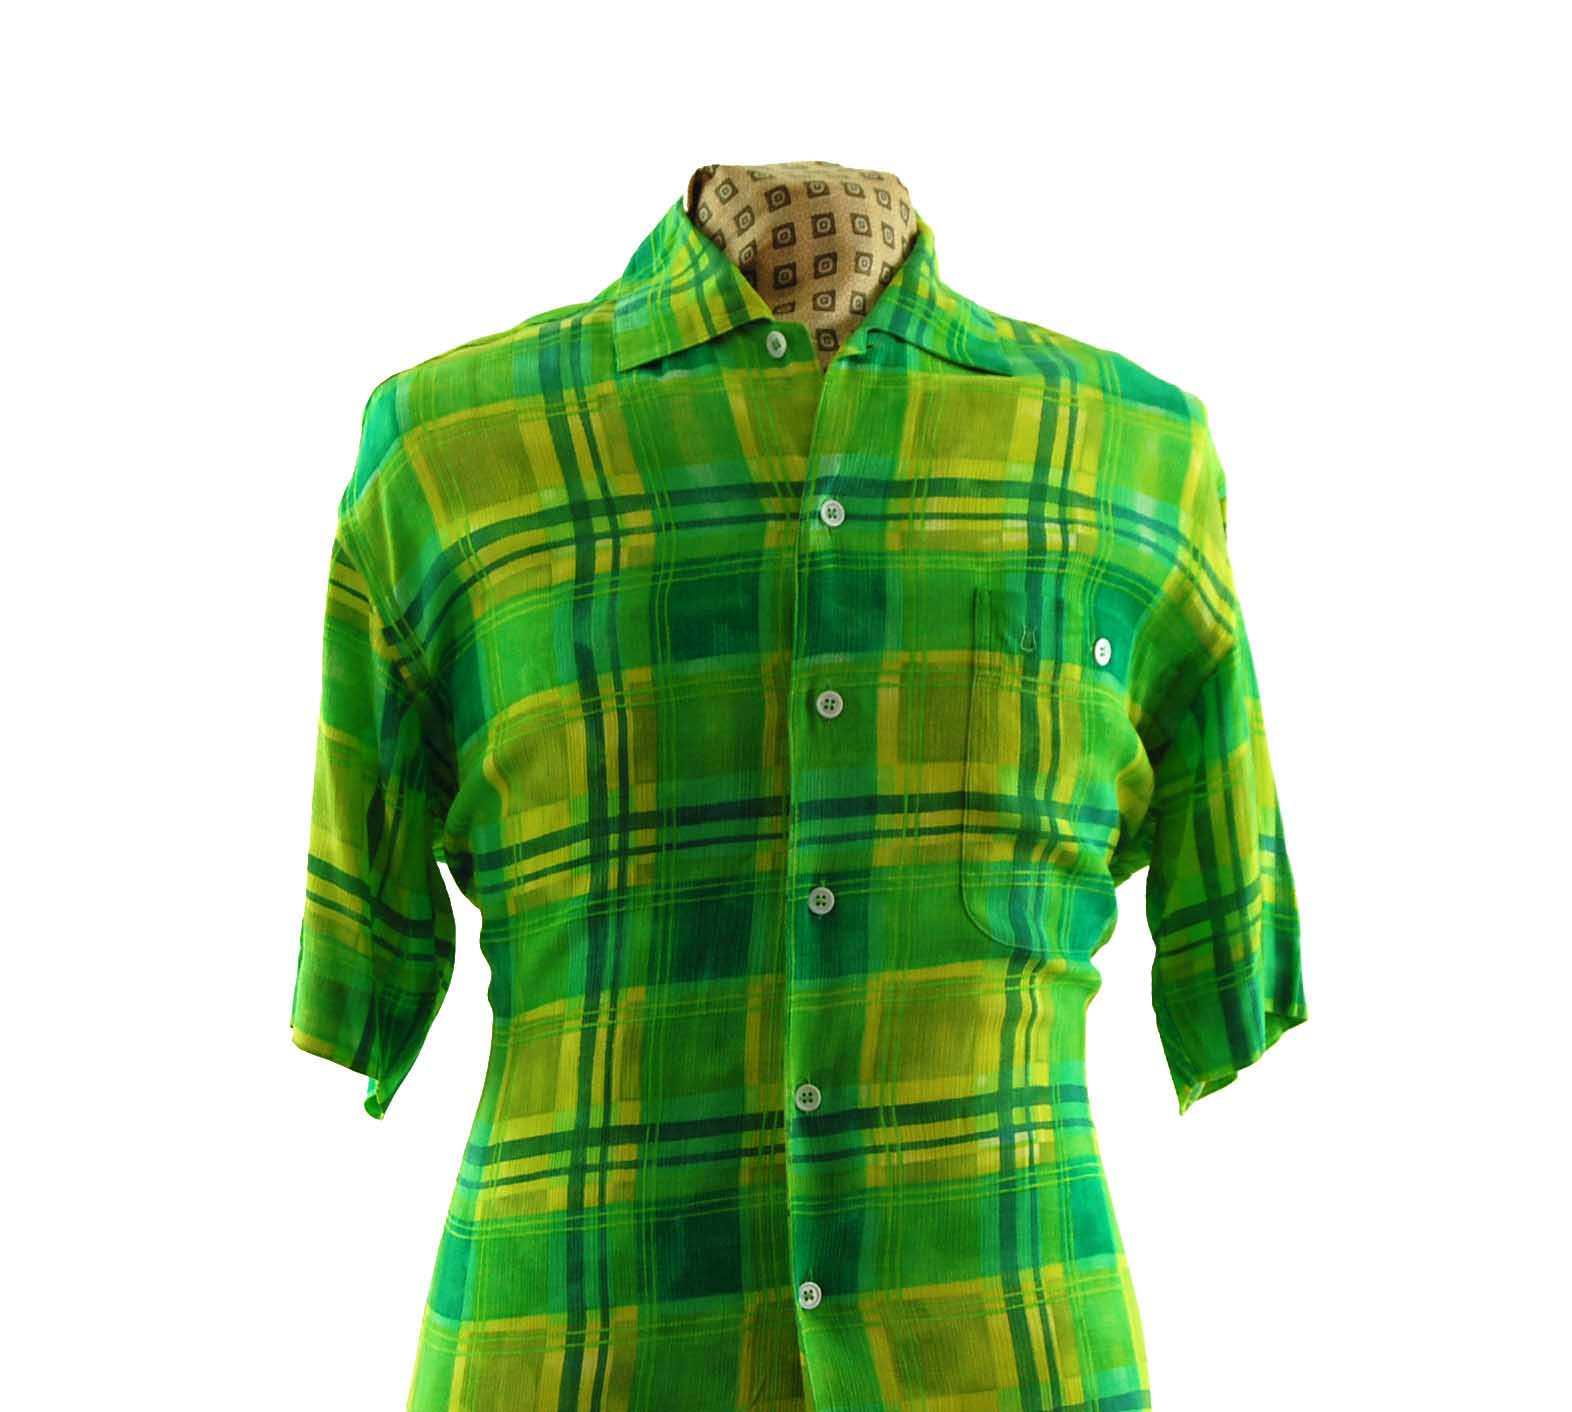 Vibrant Green Plaid Shirt - UK XL - Blue 17 Vintage Clothing